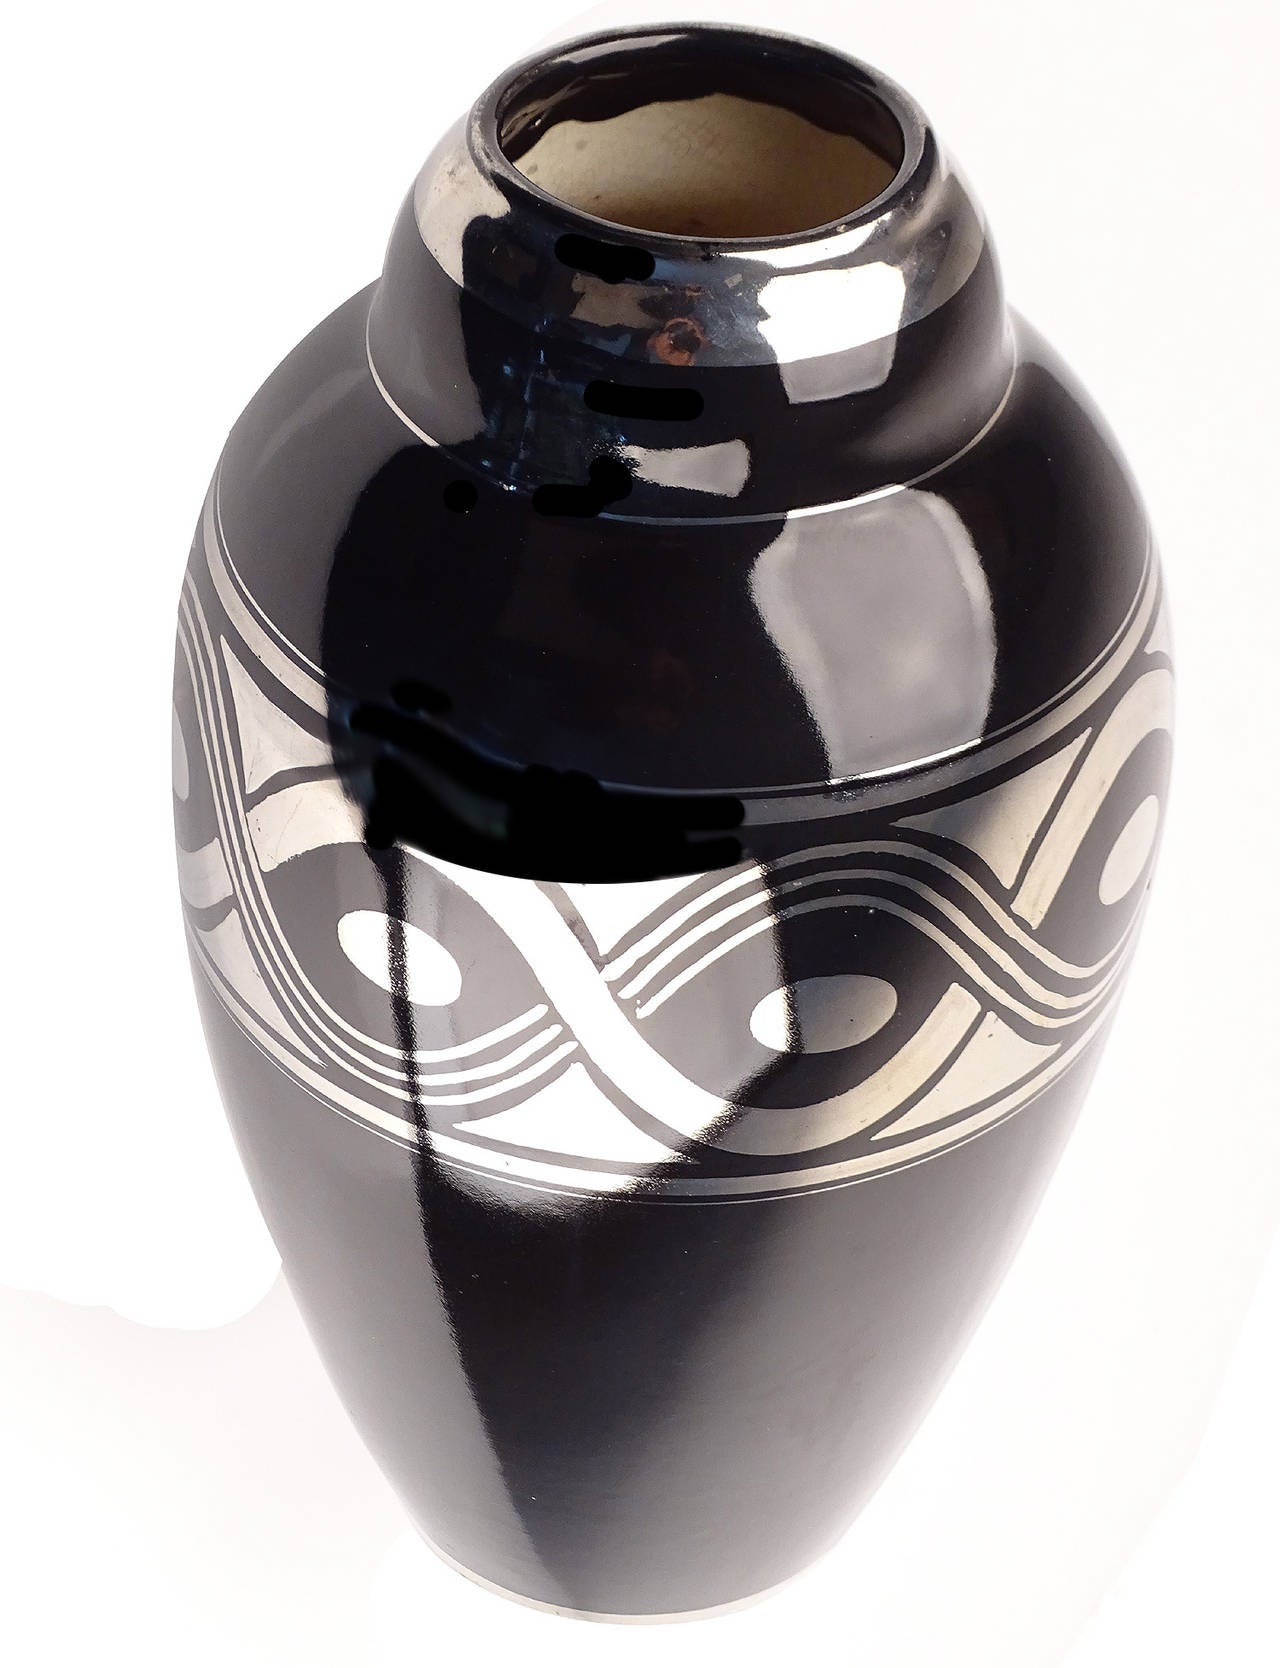 Large French Art Deco Vase with Silver Ornaments, 1930s Modernist Ceramic Design (Französisch)